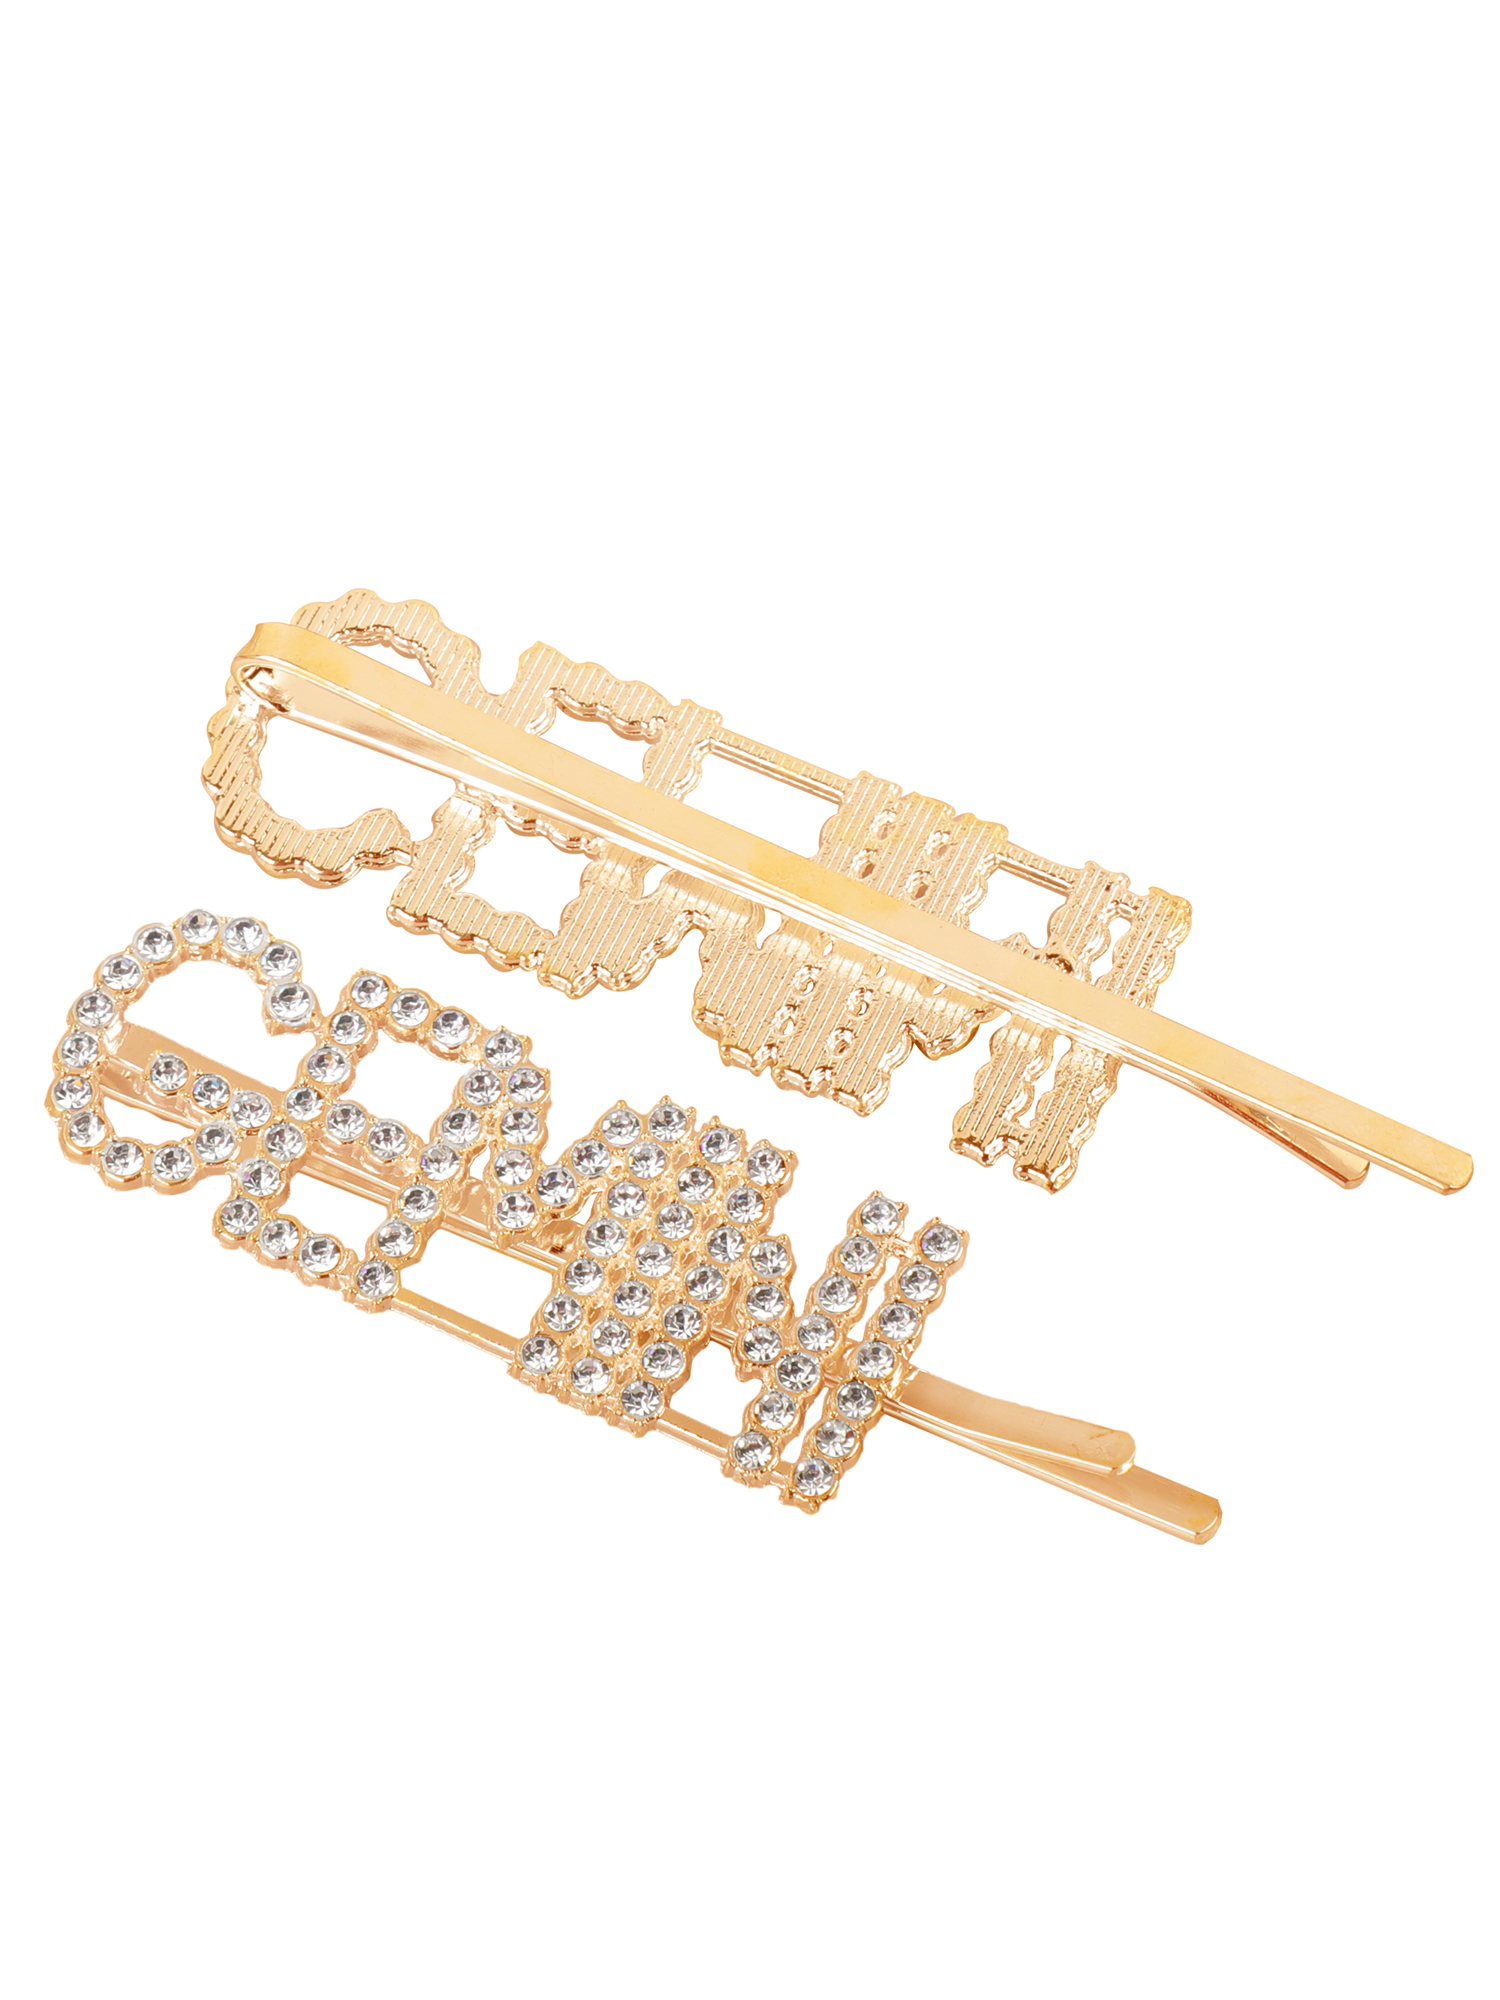 Vembley Stylish Golden Gemini Hairclip For Women and Girls